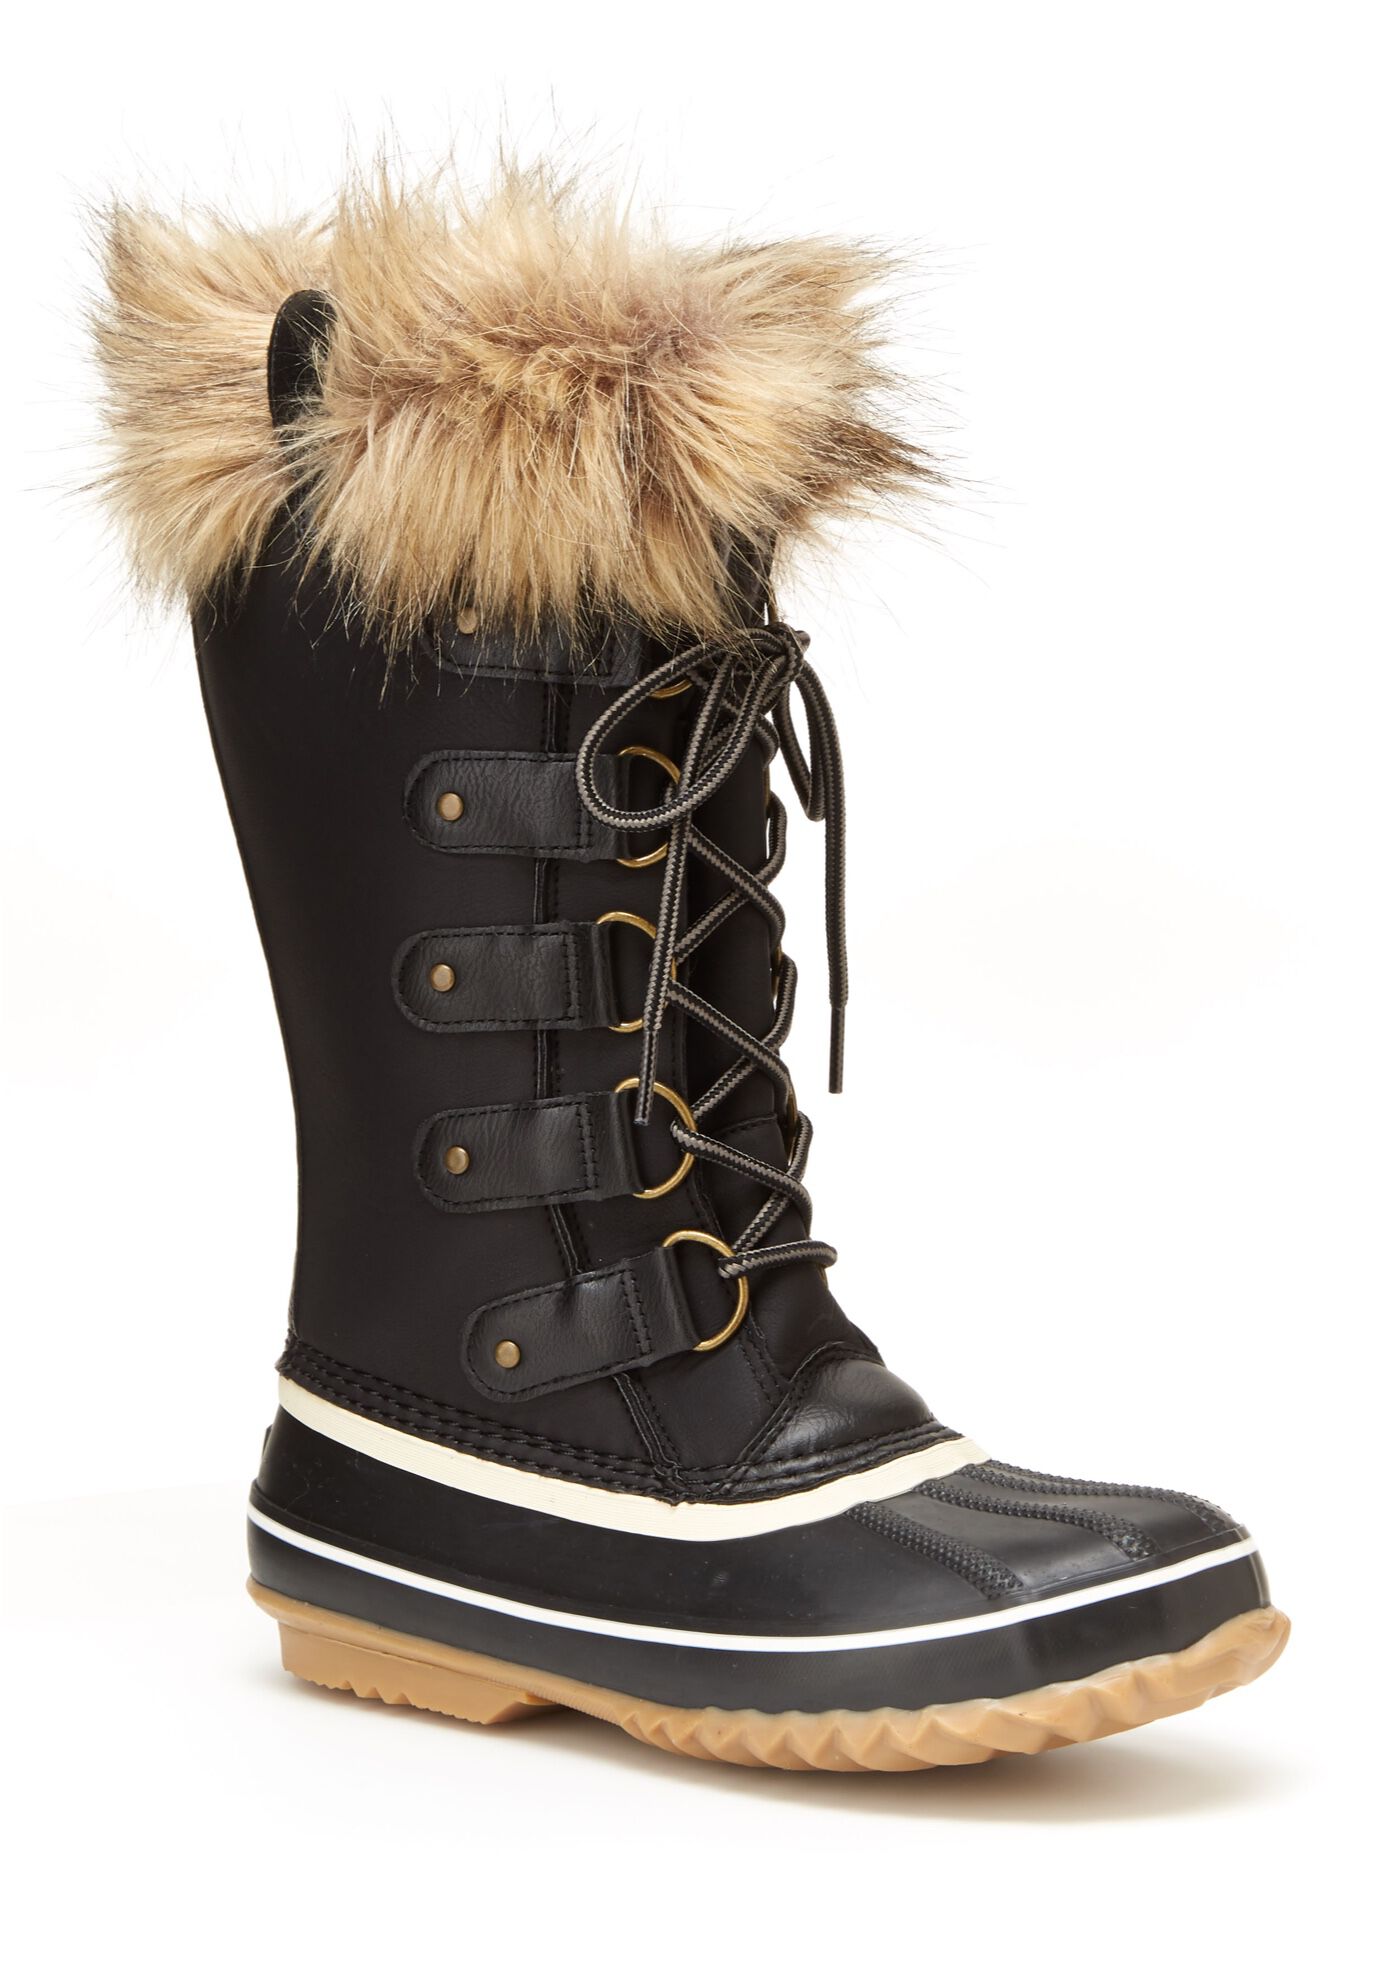 jbu jambu winter boots